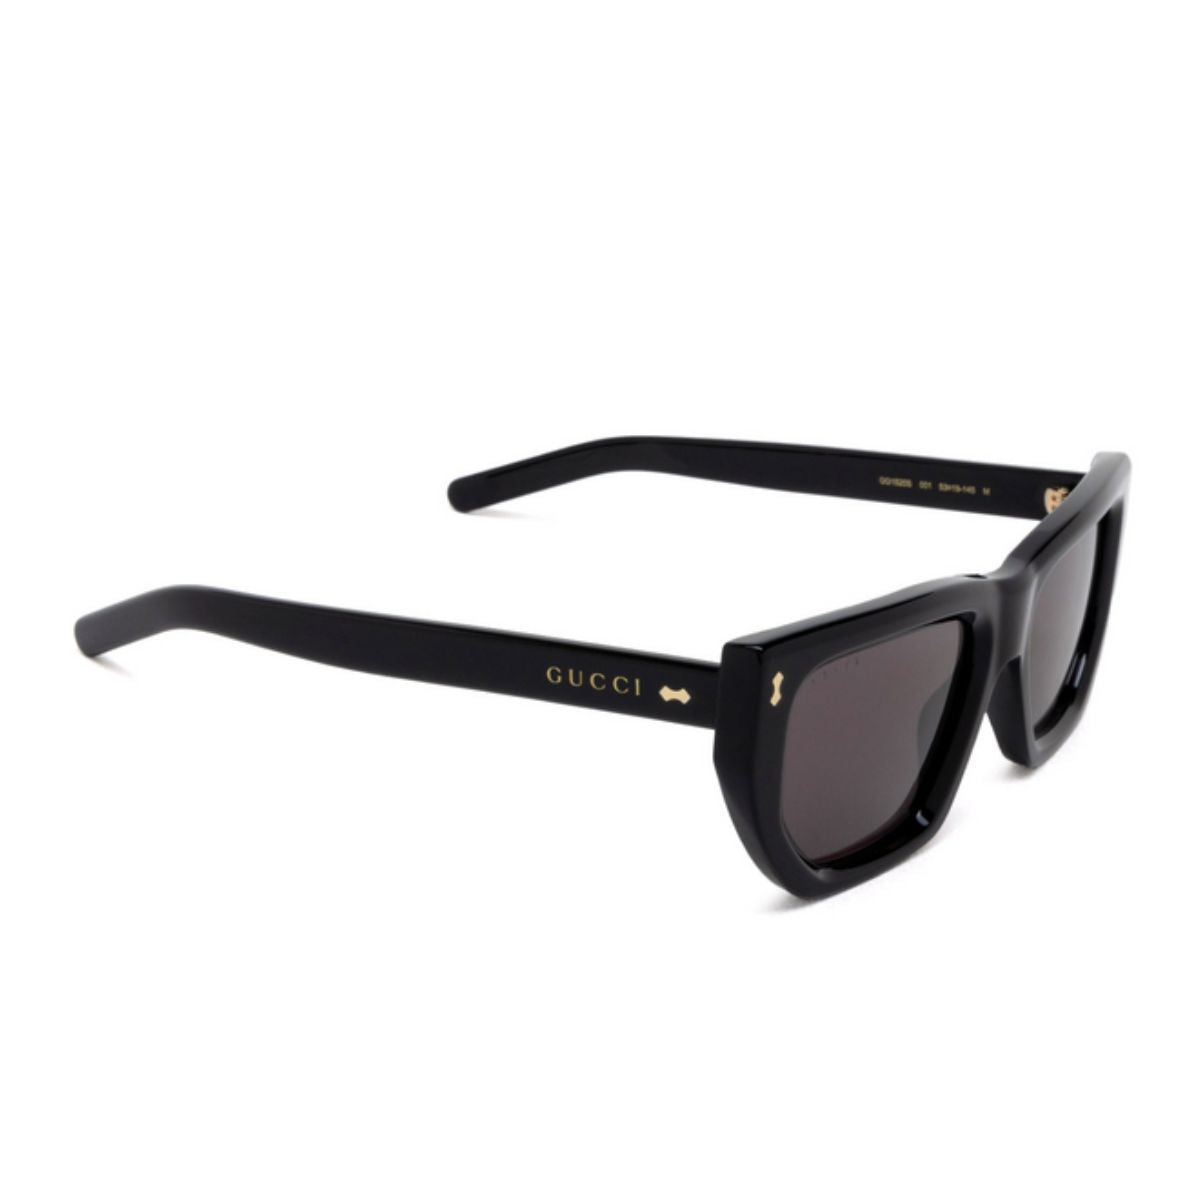 "Gucci 1520S 001 Sunglasses for Women - Shop Online at Optorium"